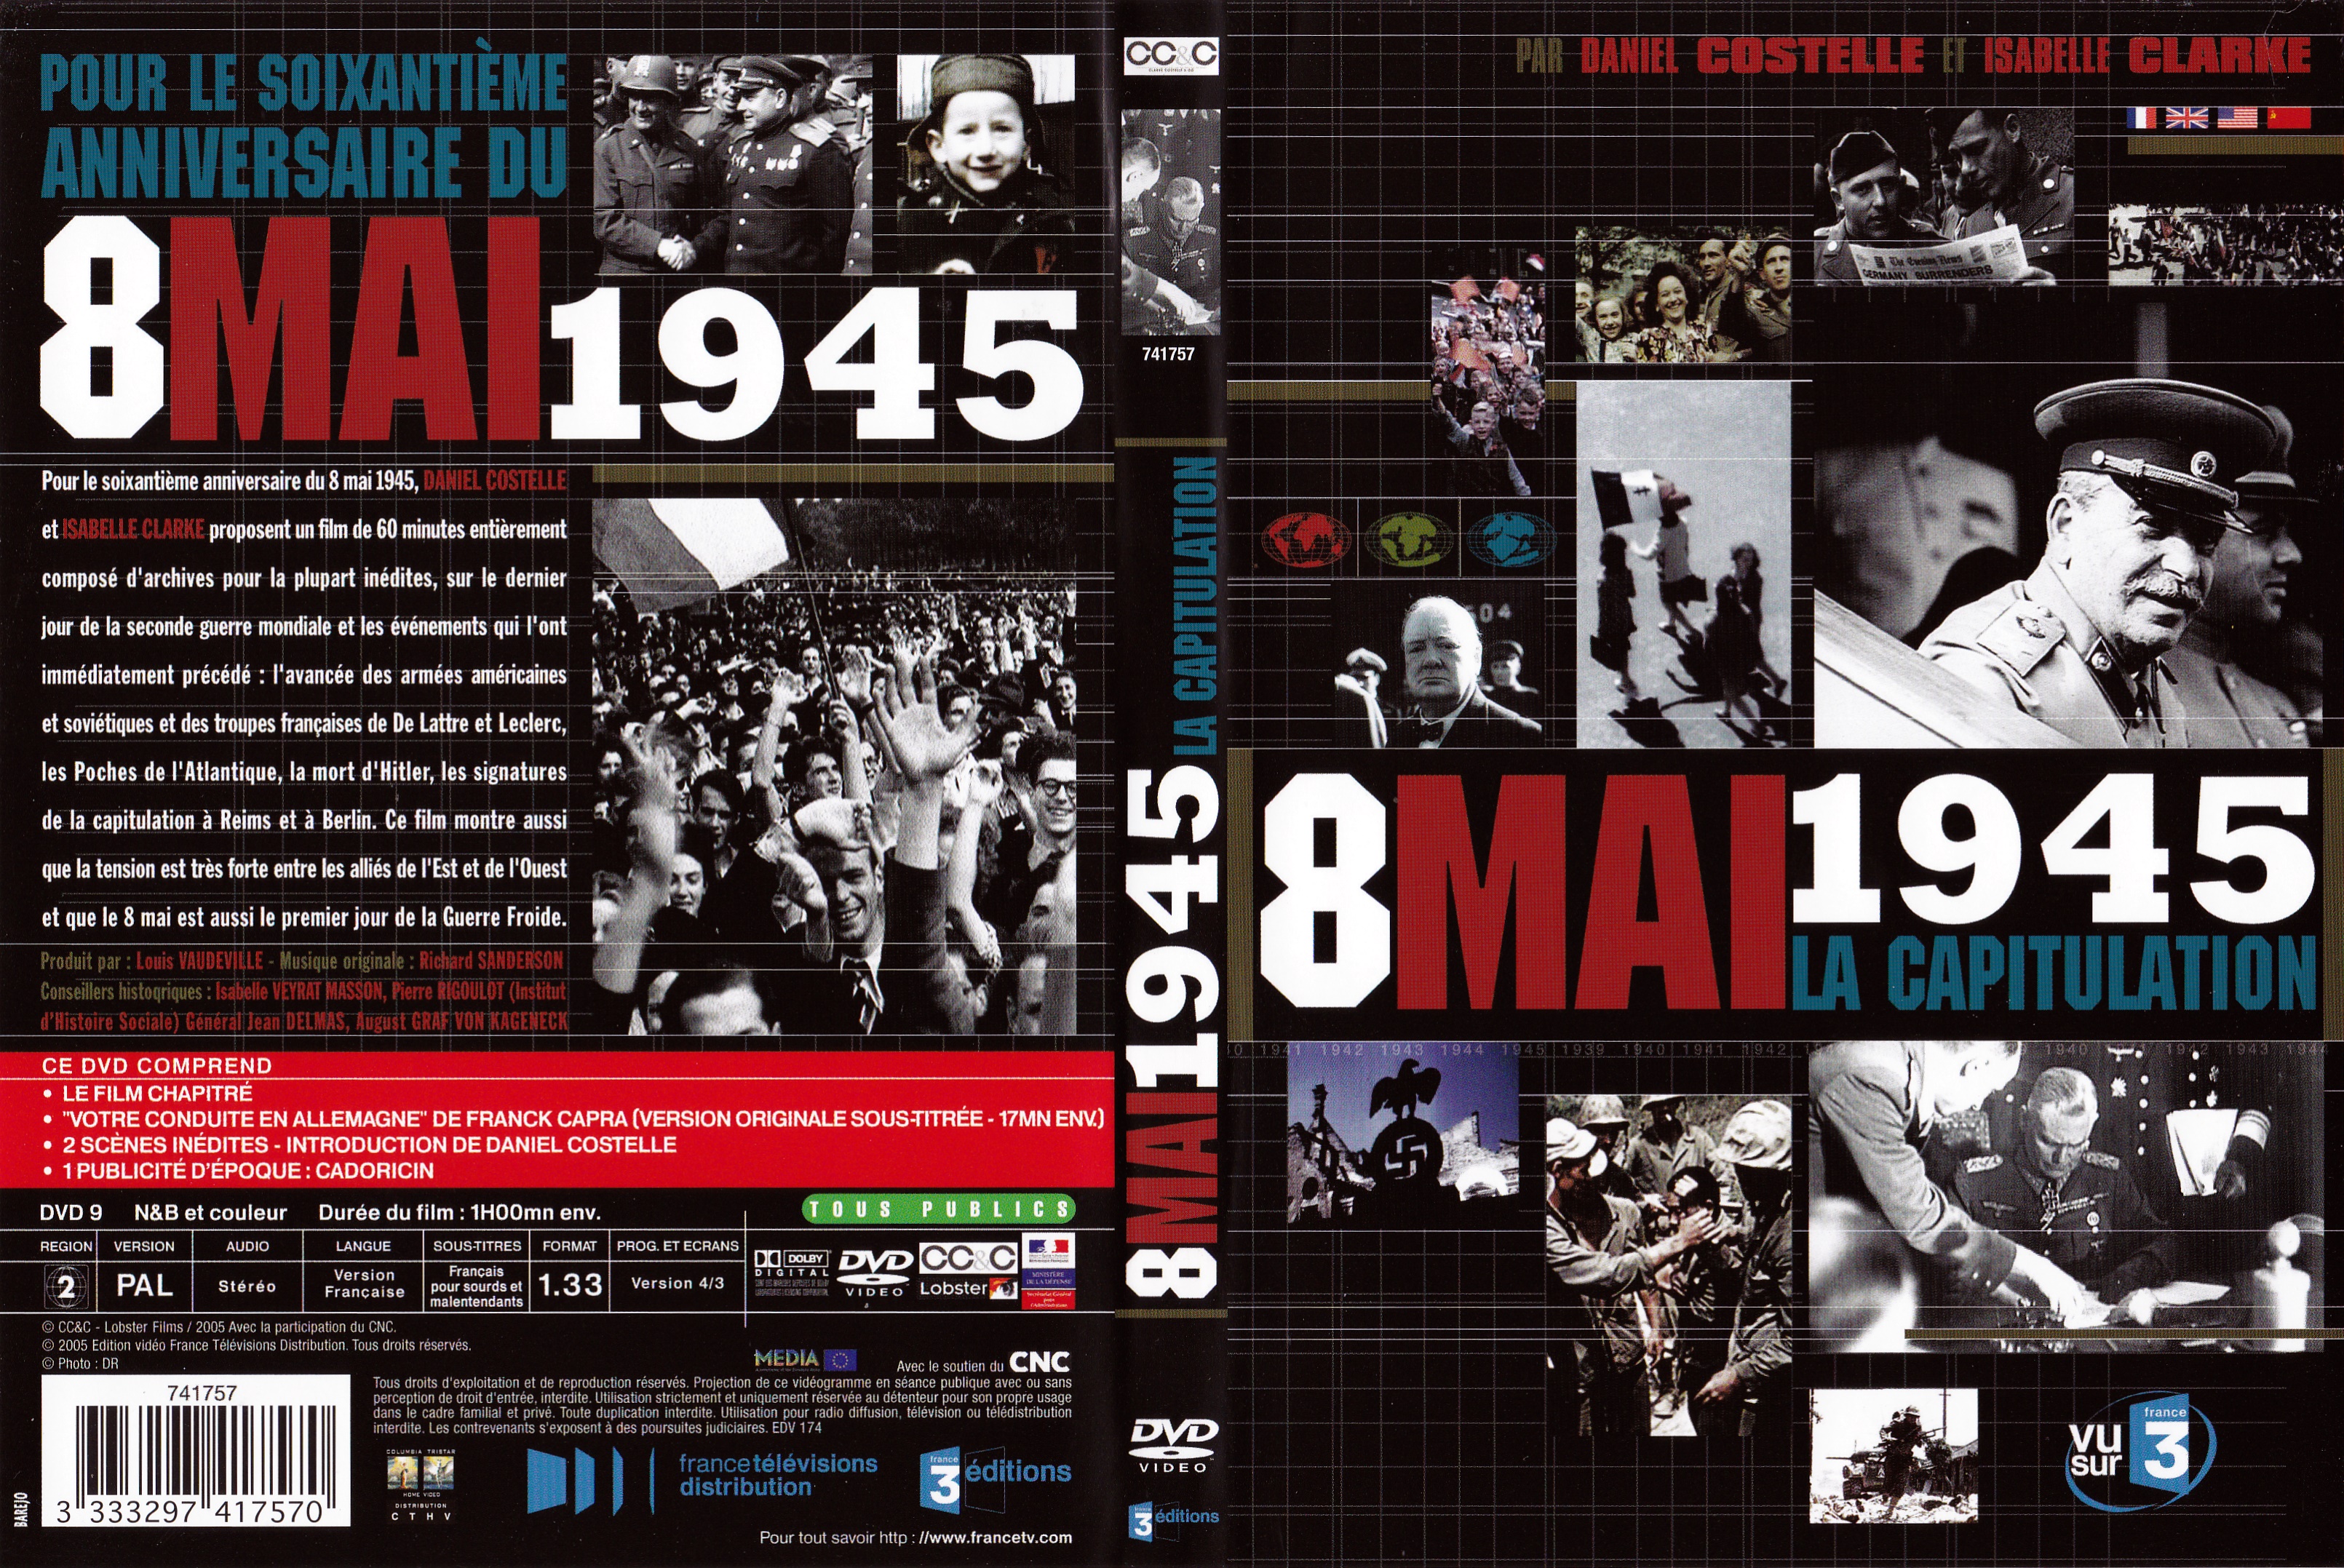 Jaquette DVD 8 Mai 1945 - La capitulation